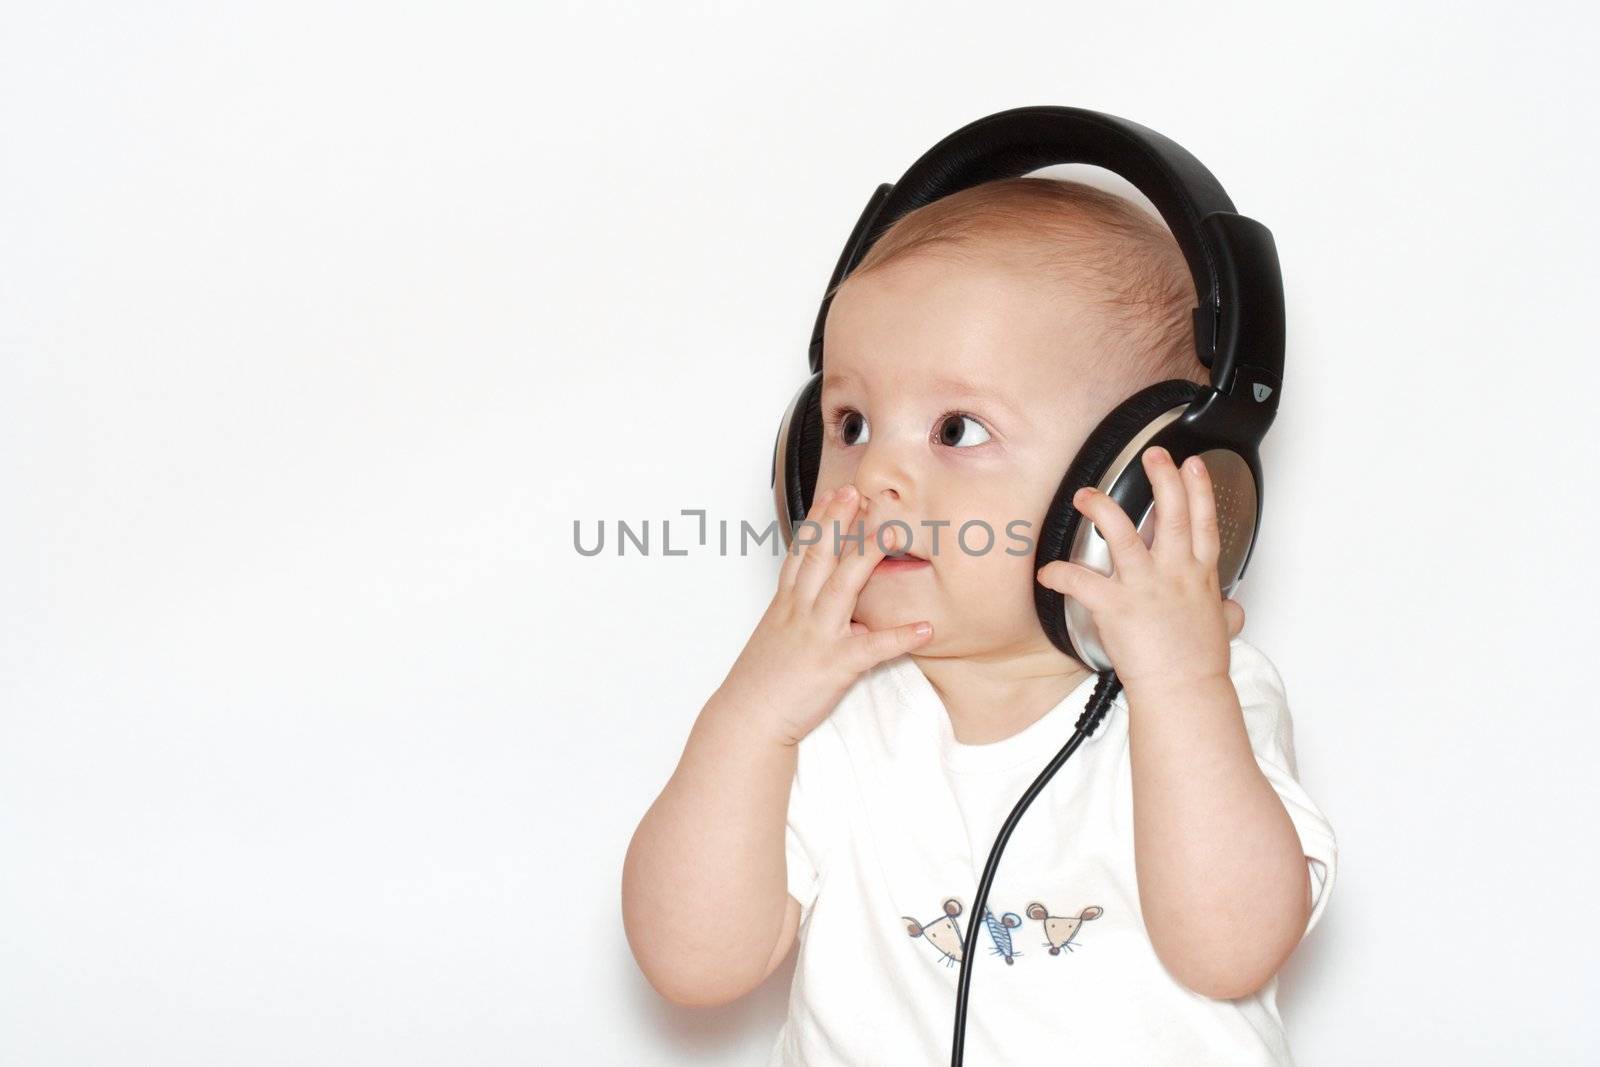 small boys with headphones